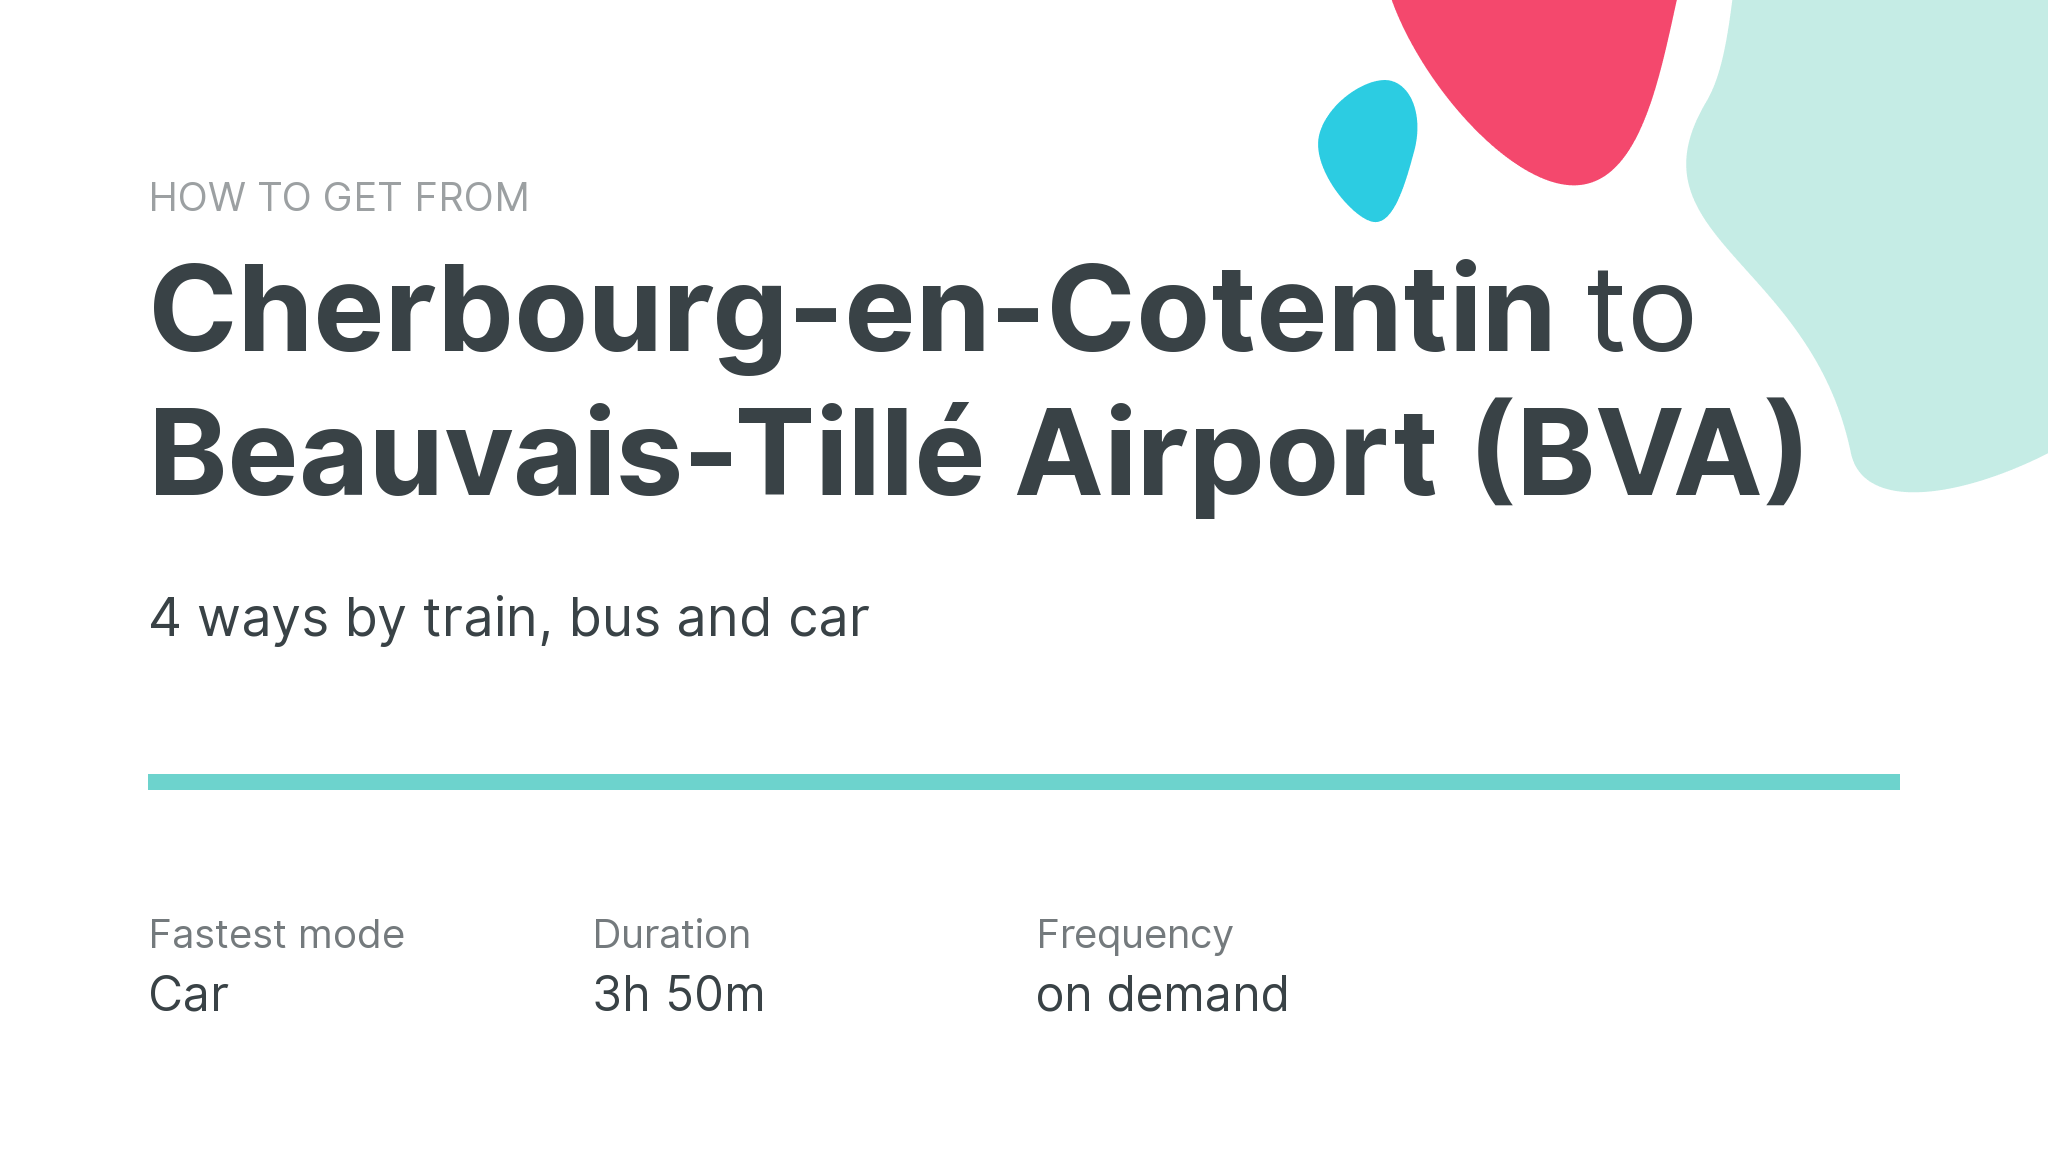 How do I get from Cherbourg-en-Cotentin to Beauvais-Tillé Airport (BVA)